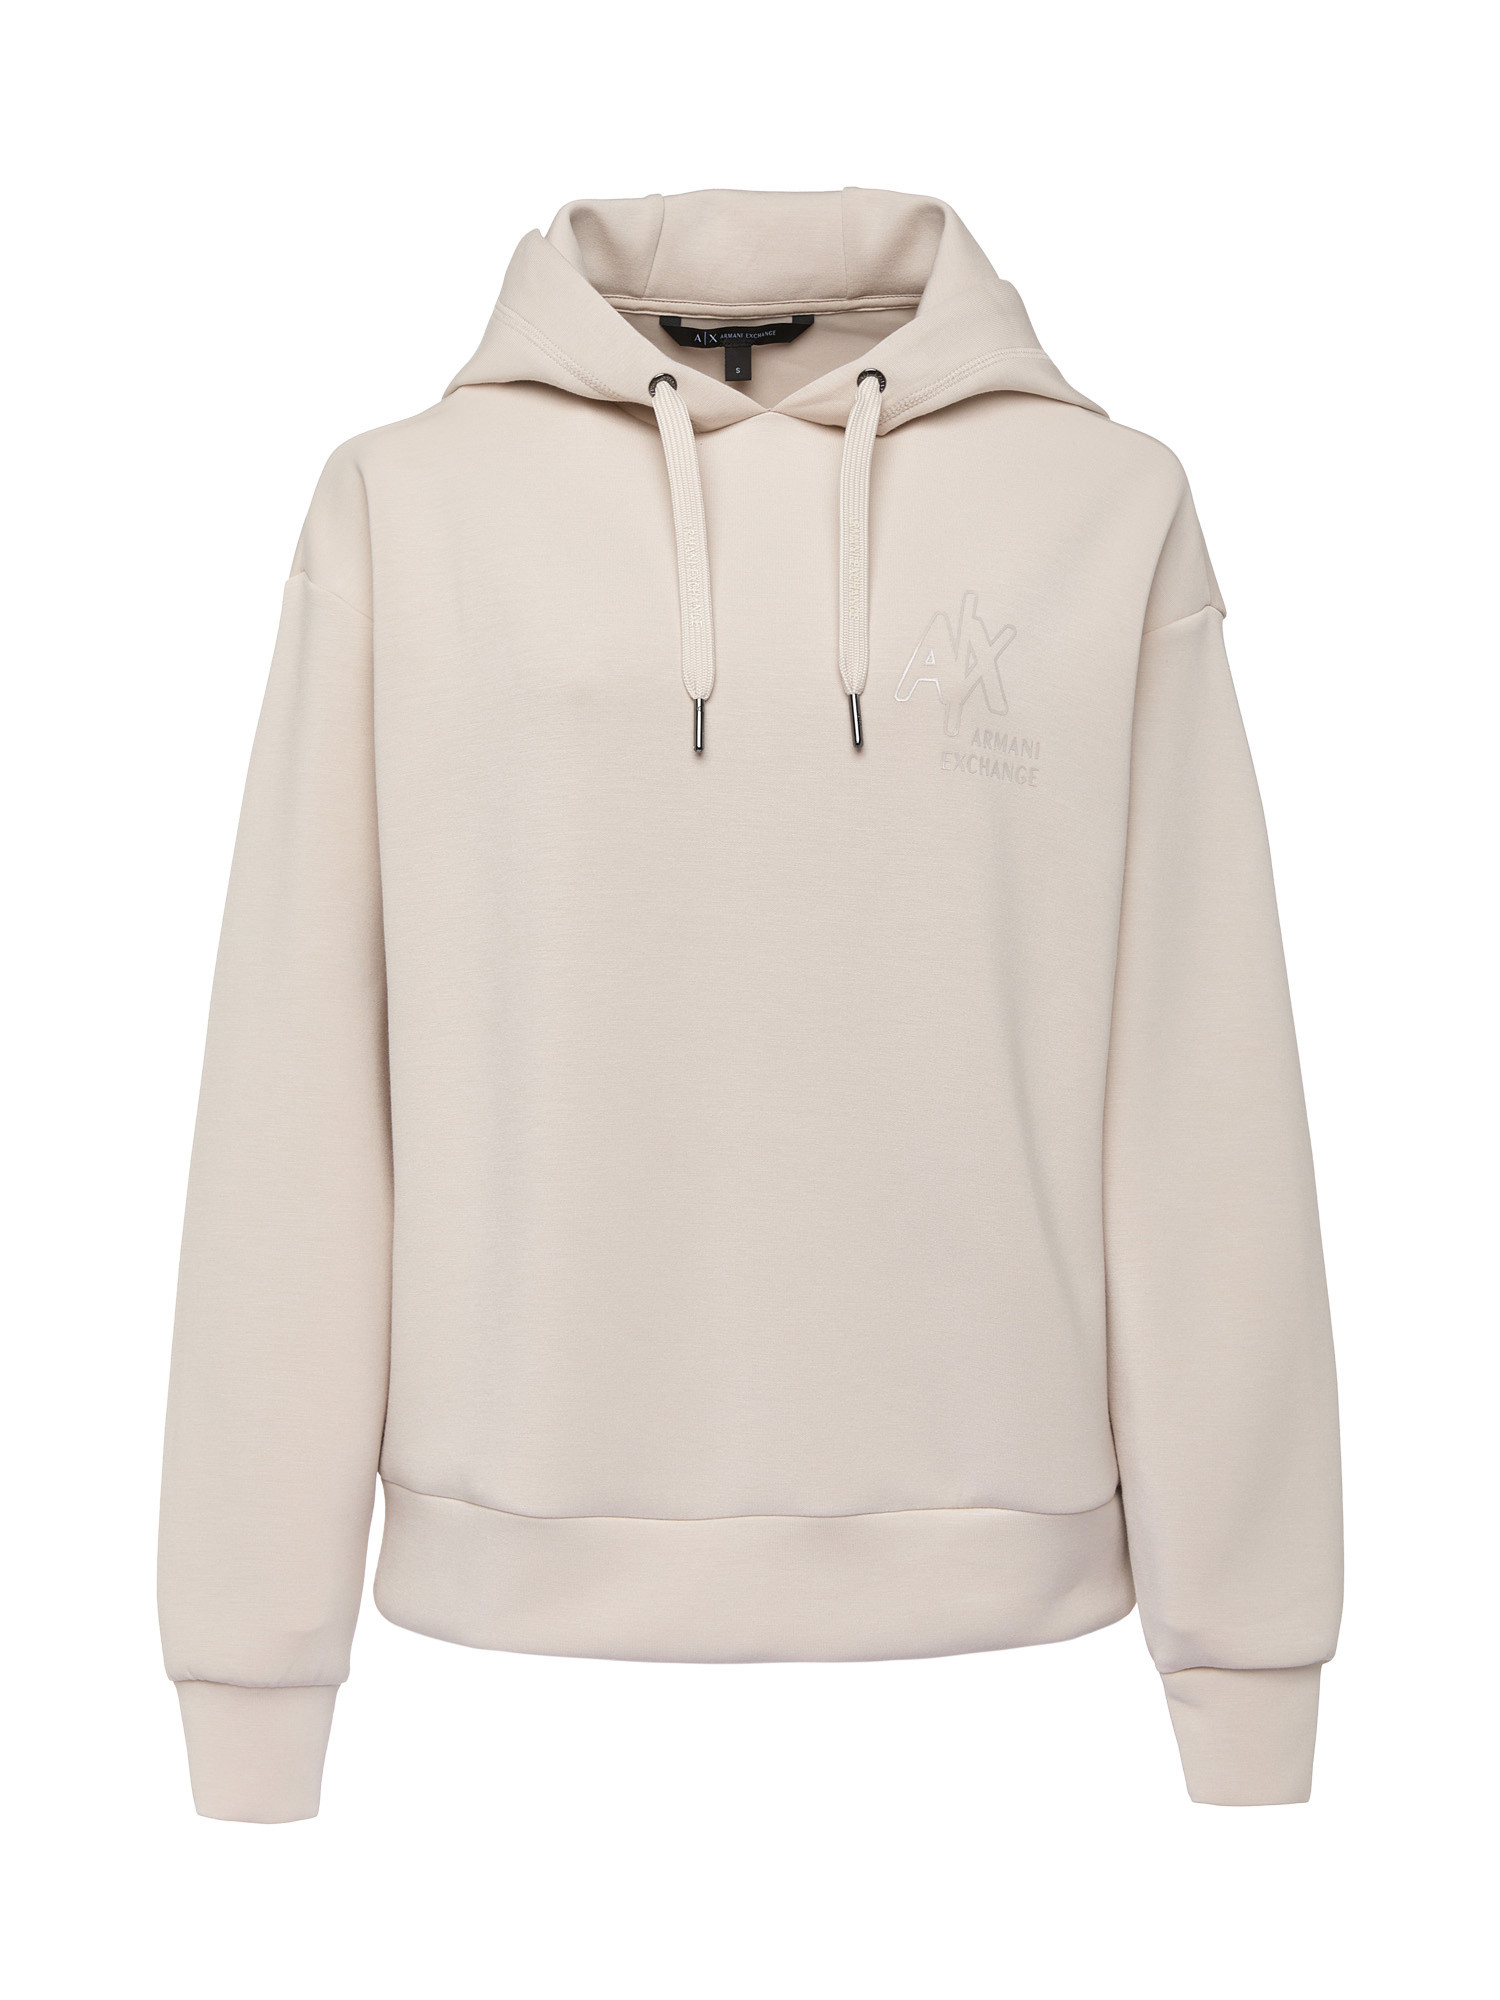 Armani Exchange - Hooded sweatshirt with logo print, Light Beige, large image number 0